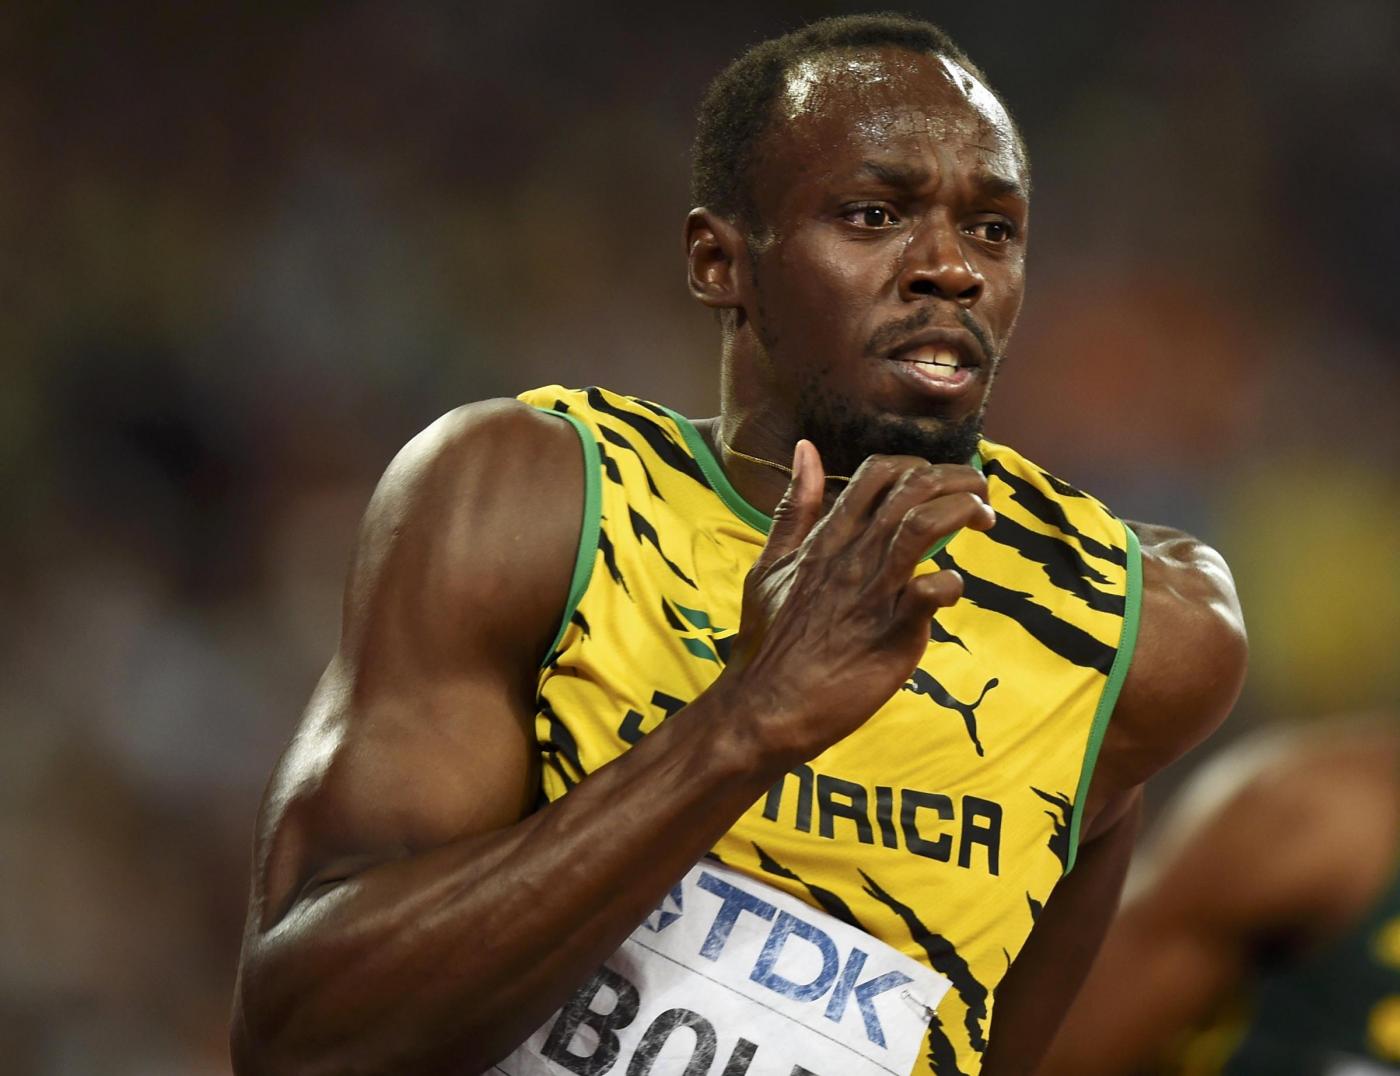 Mondiali Atletica 2015: Bolt batte Gatlin anche sui 200 metri